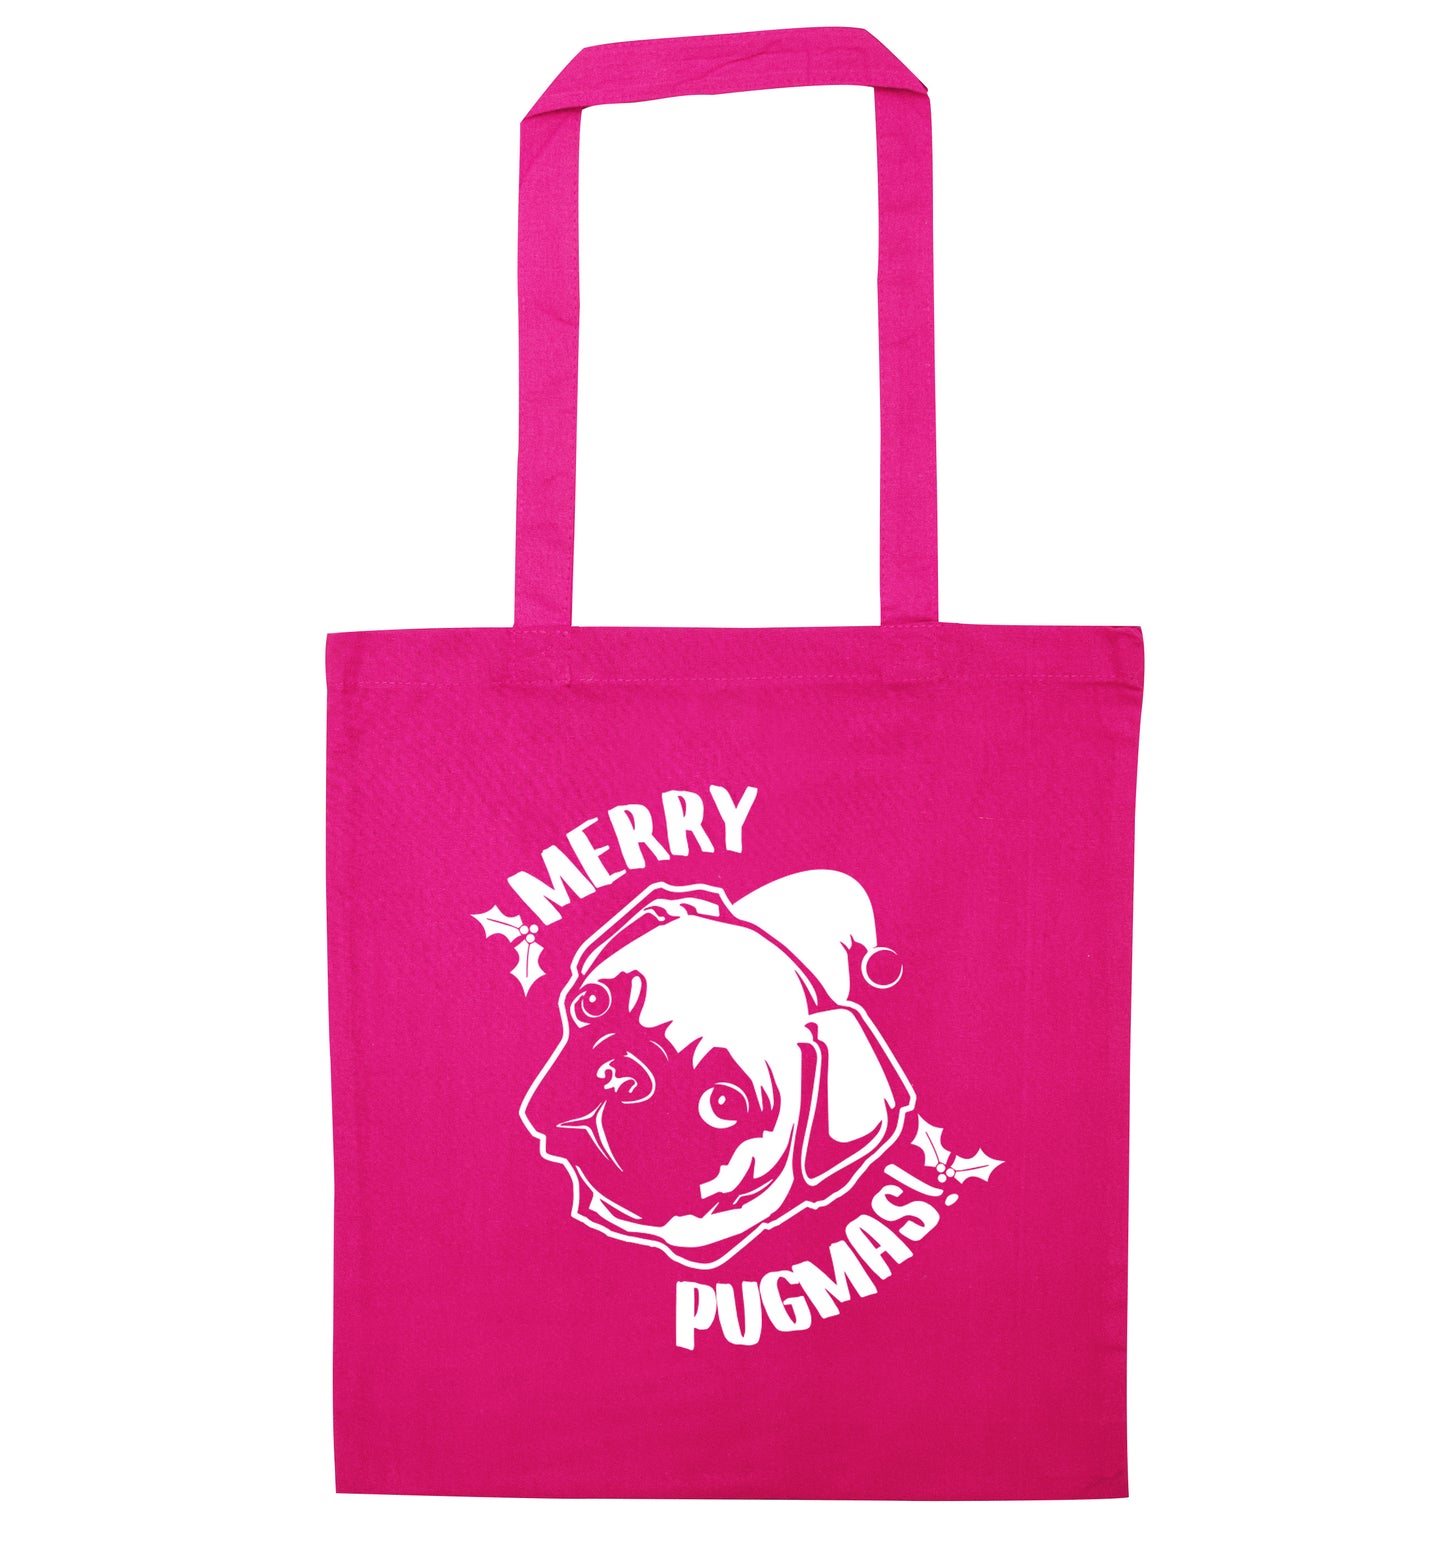 Merry Pugmas pink tote bag